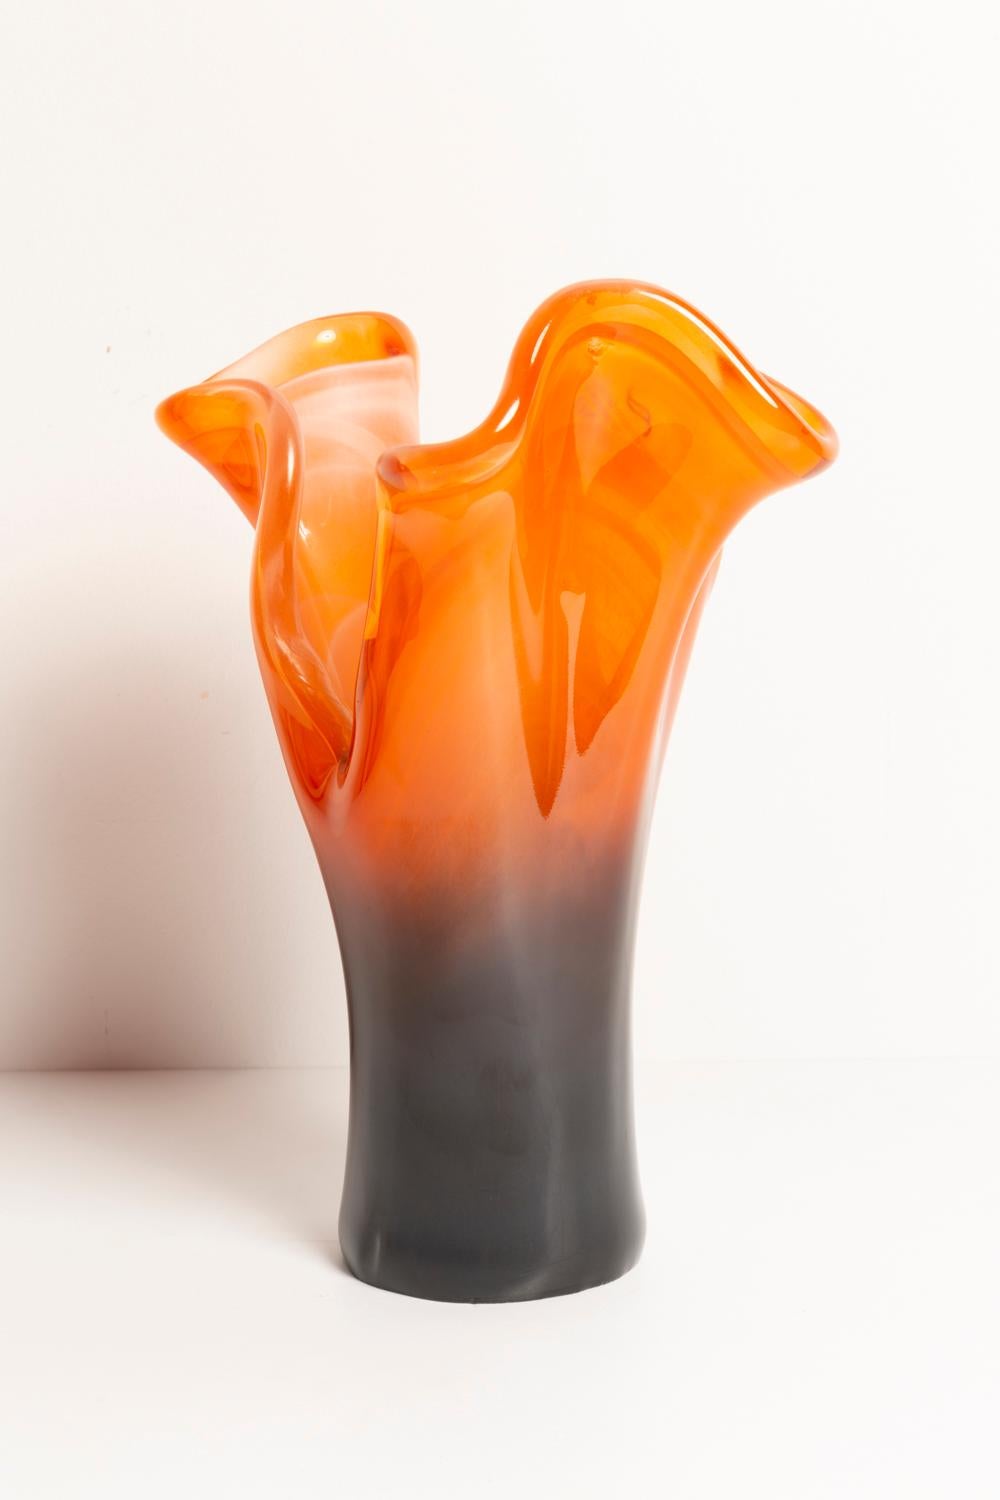 Midcentury Vintage Orange and Black Murano Glass Vase, Italy, 2000s For Sale 3